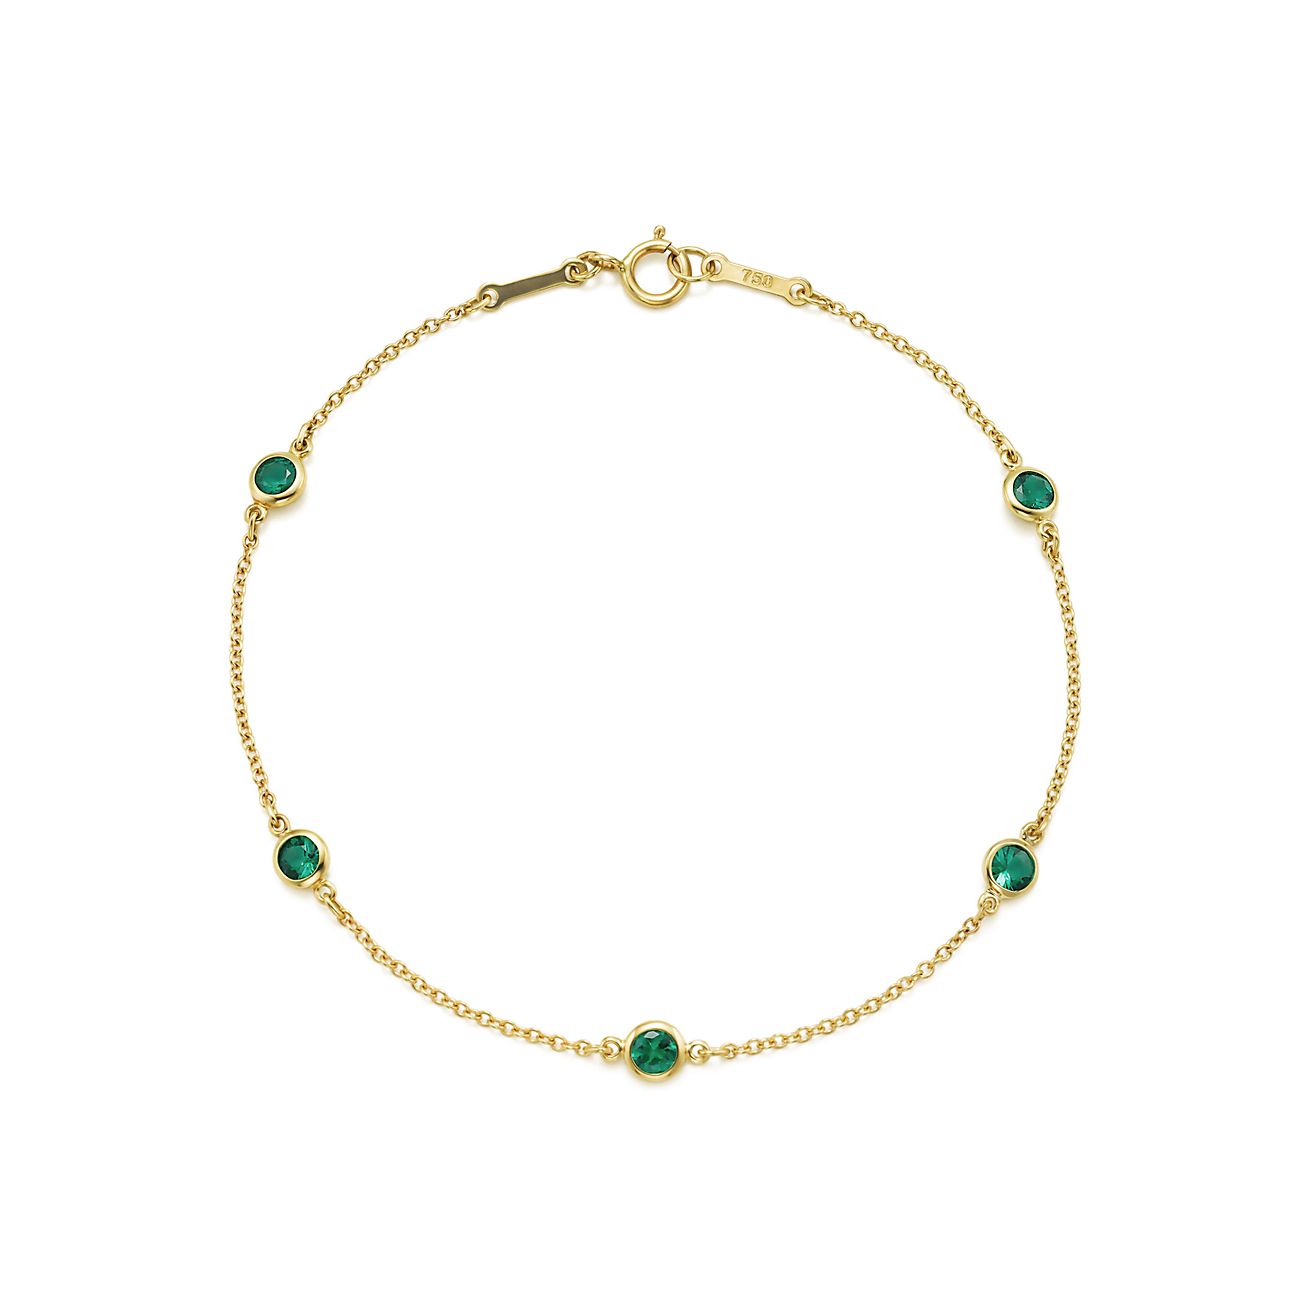 Yard bracelet in 18k gold with emeralds 